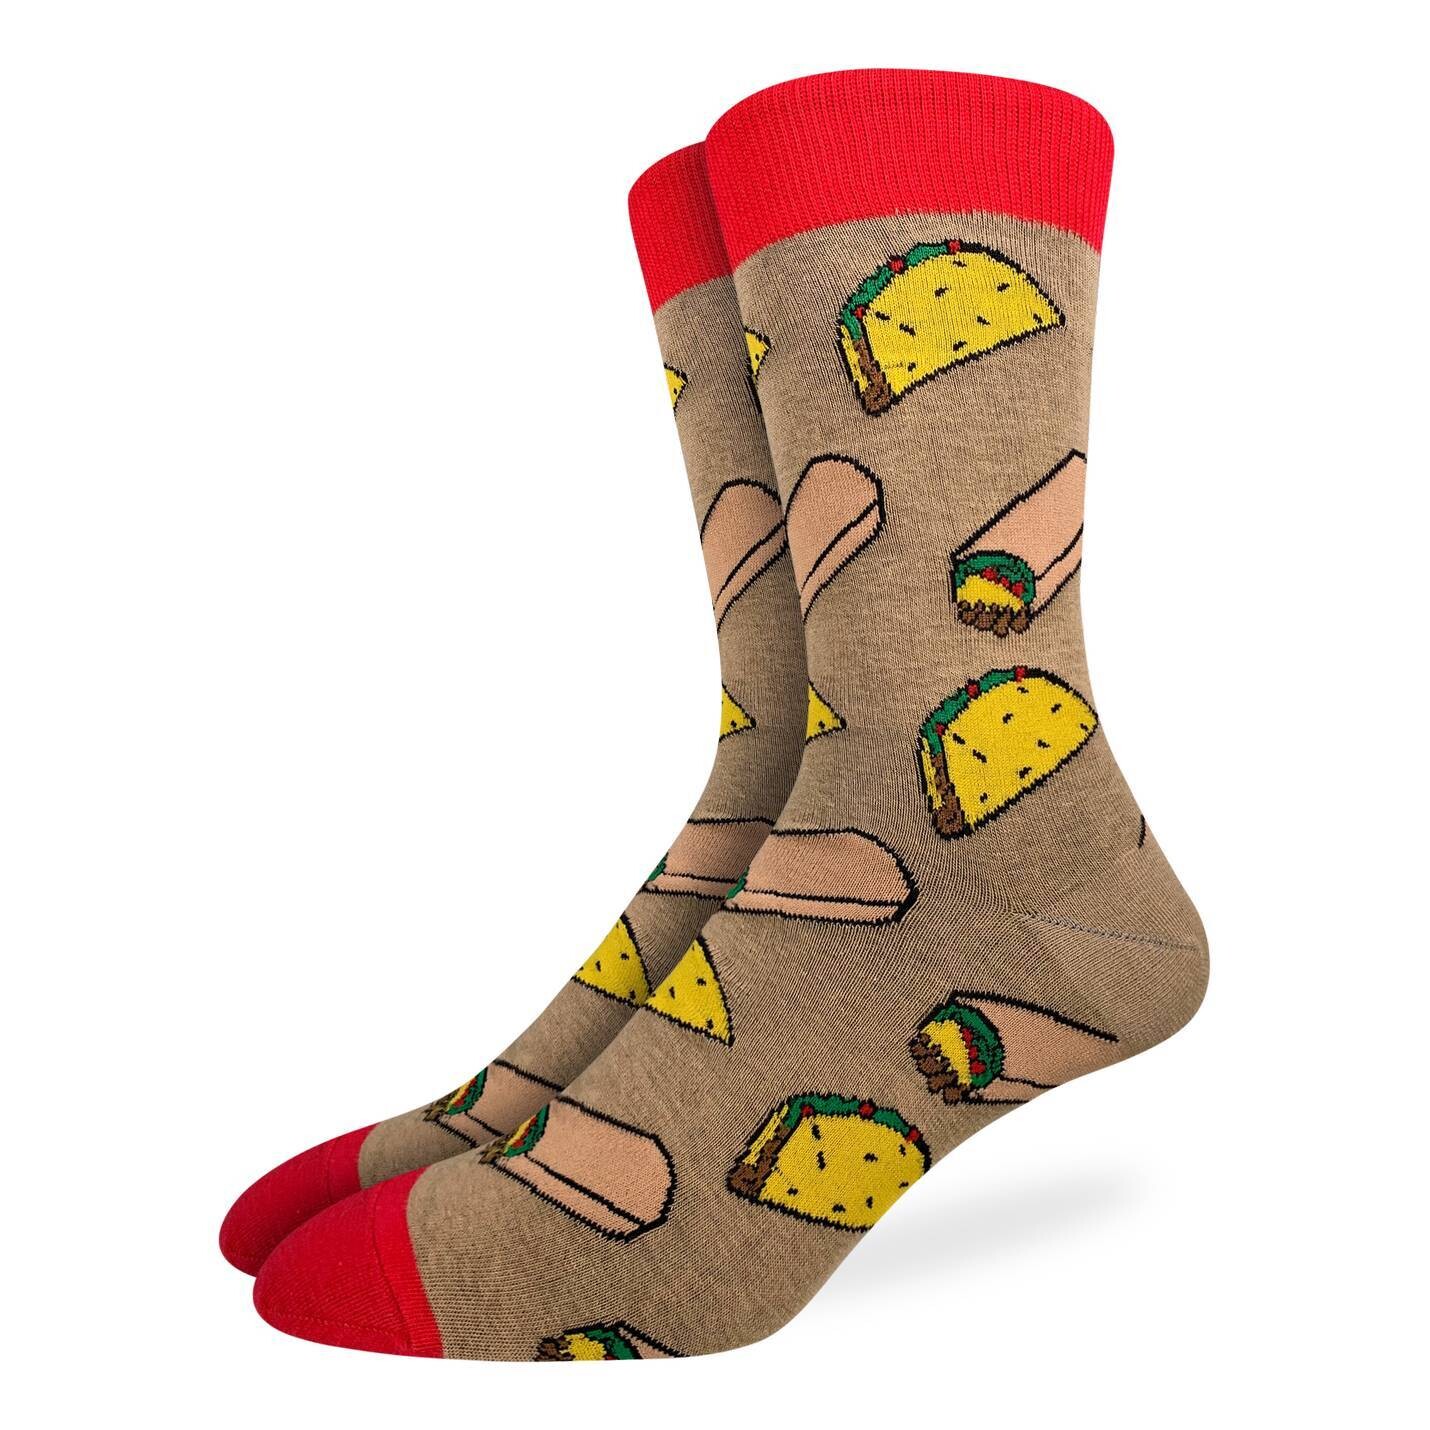 Taco & Burrito socks | M/L adult sizes | Good Luck Sock